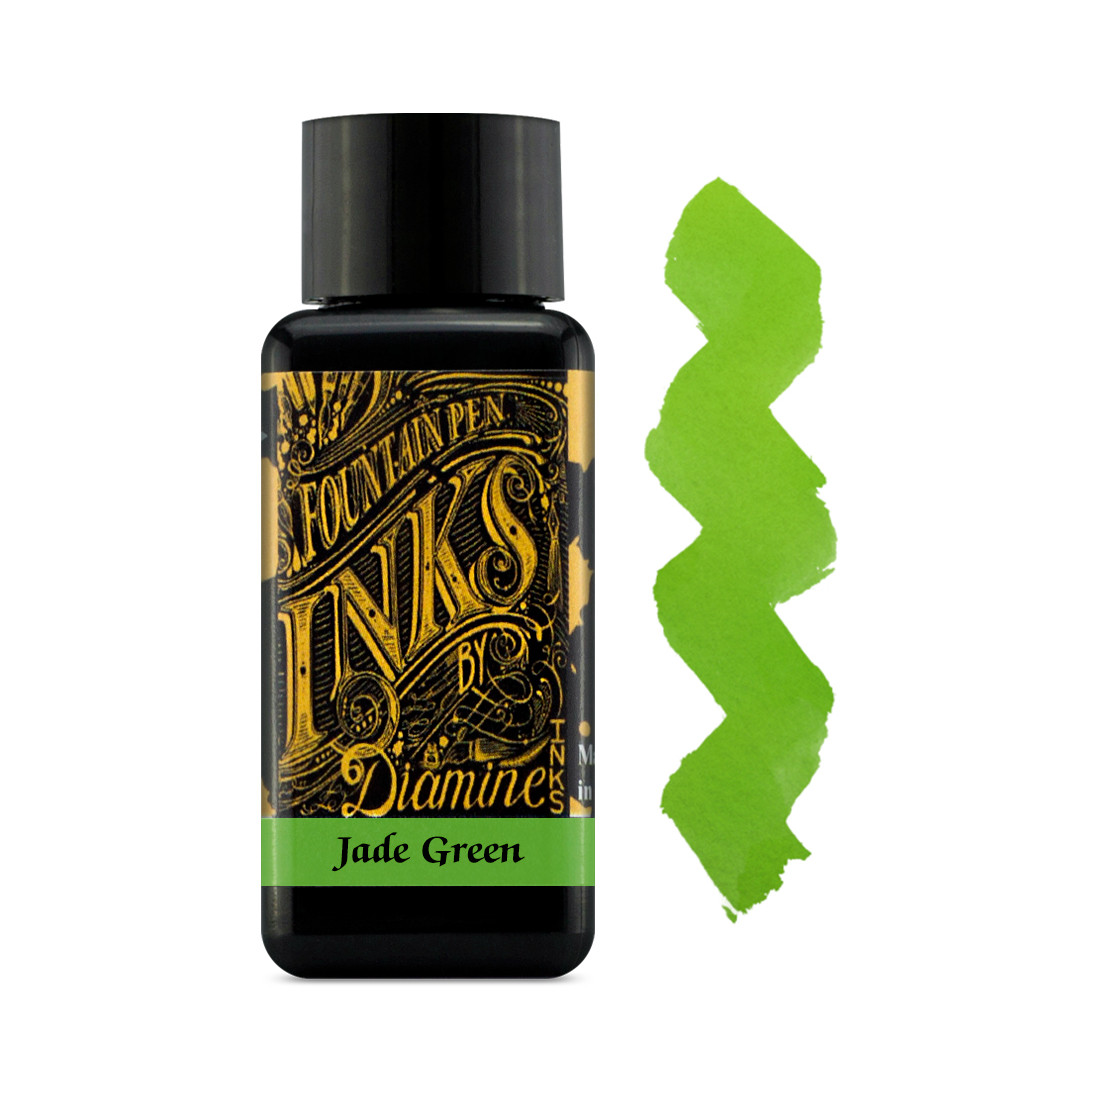 Diamine Ink Bottle 30ml - Jade Green